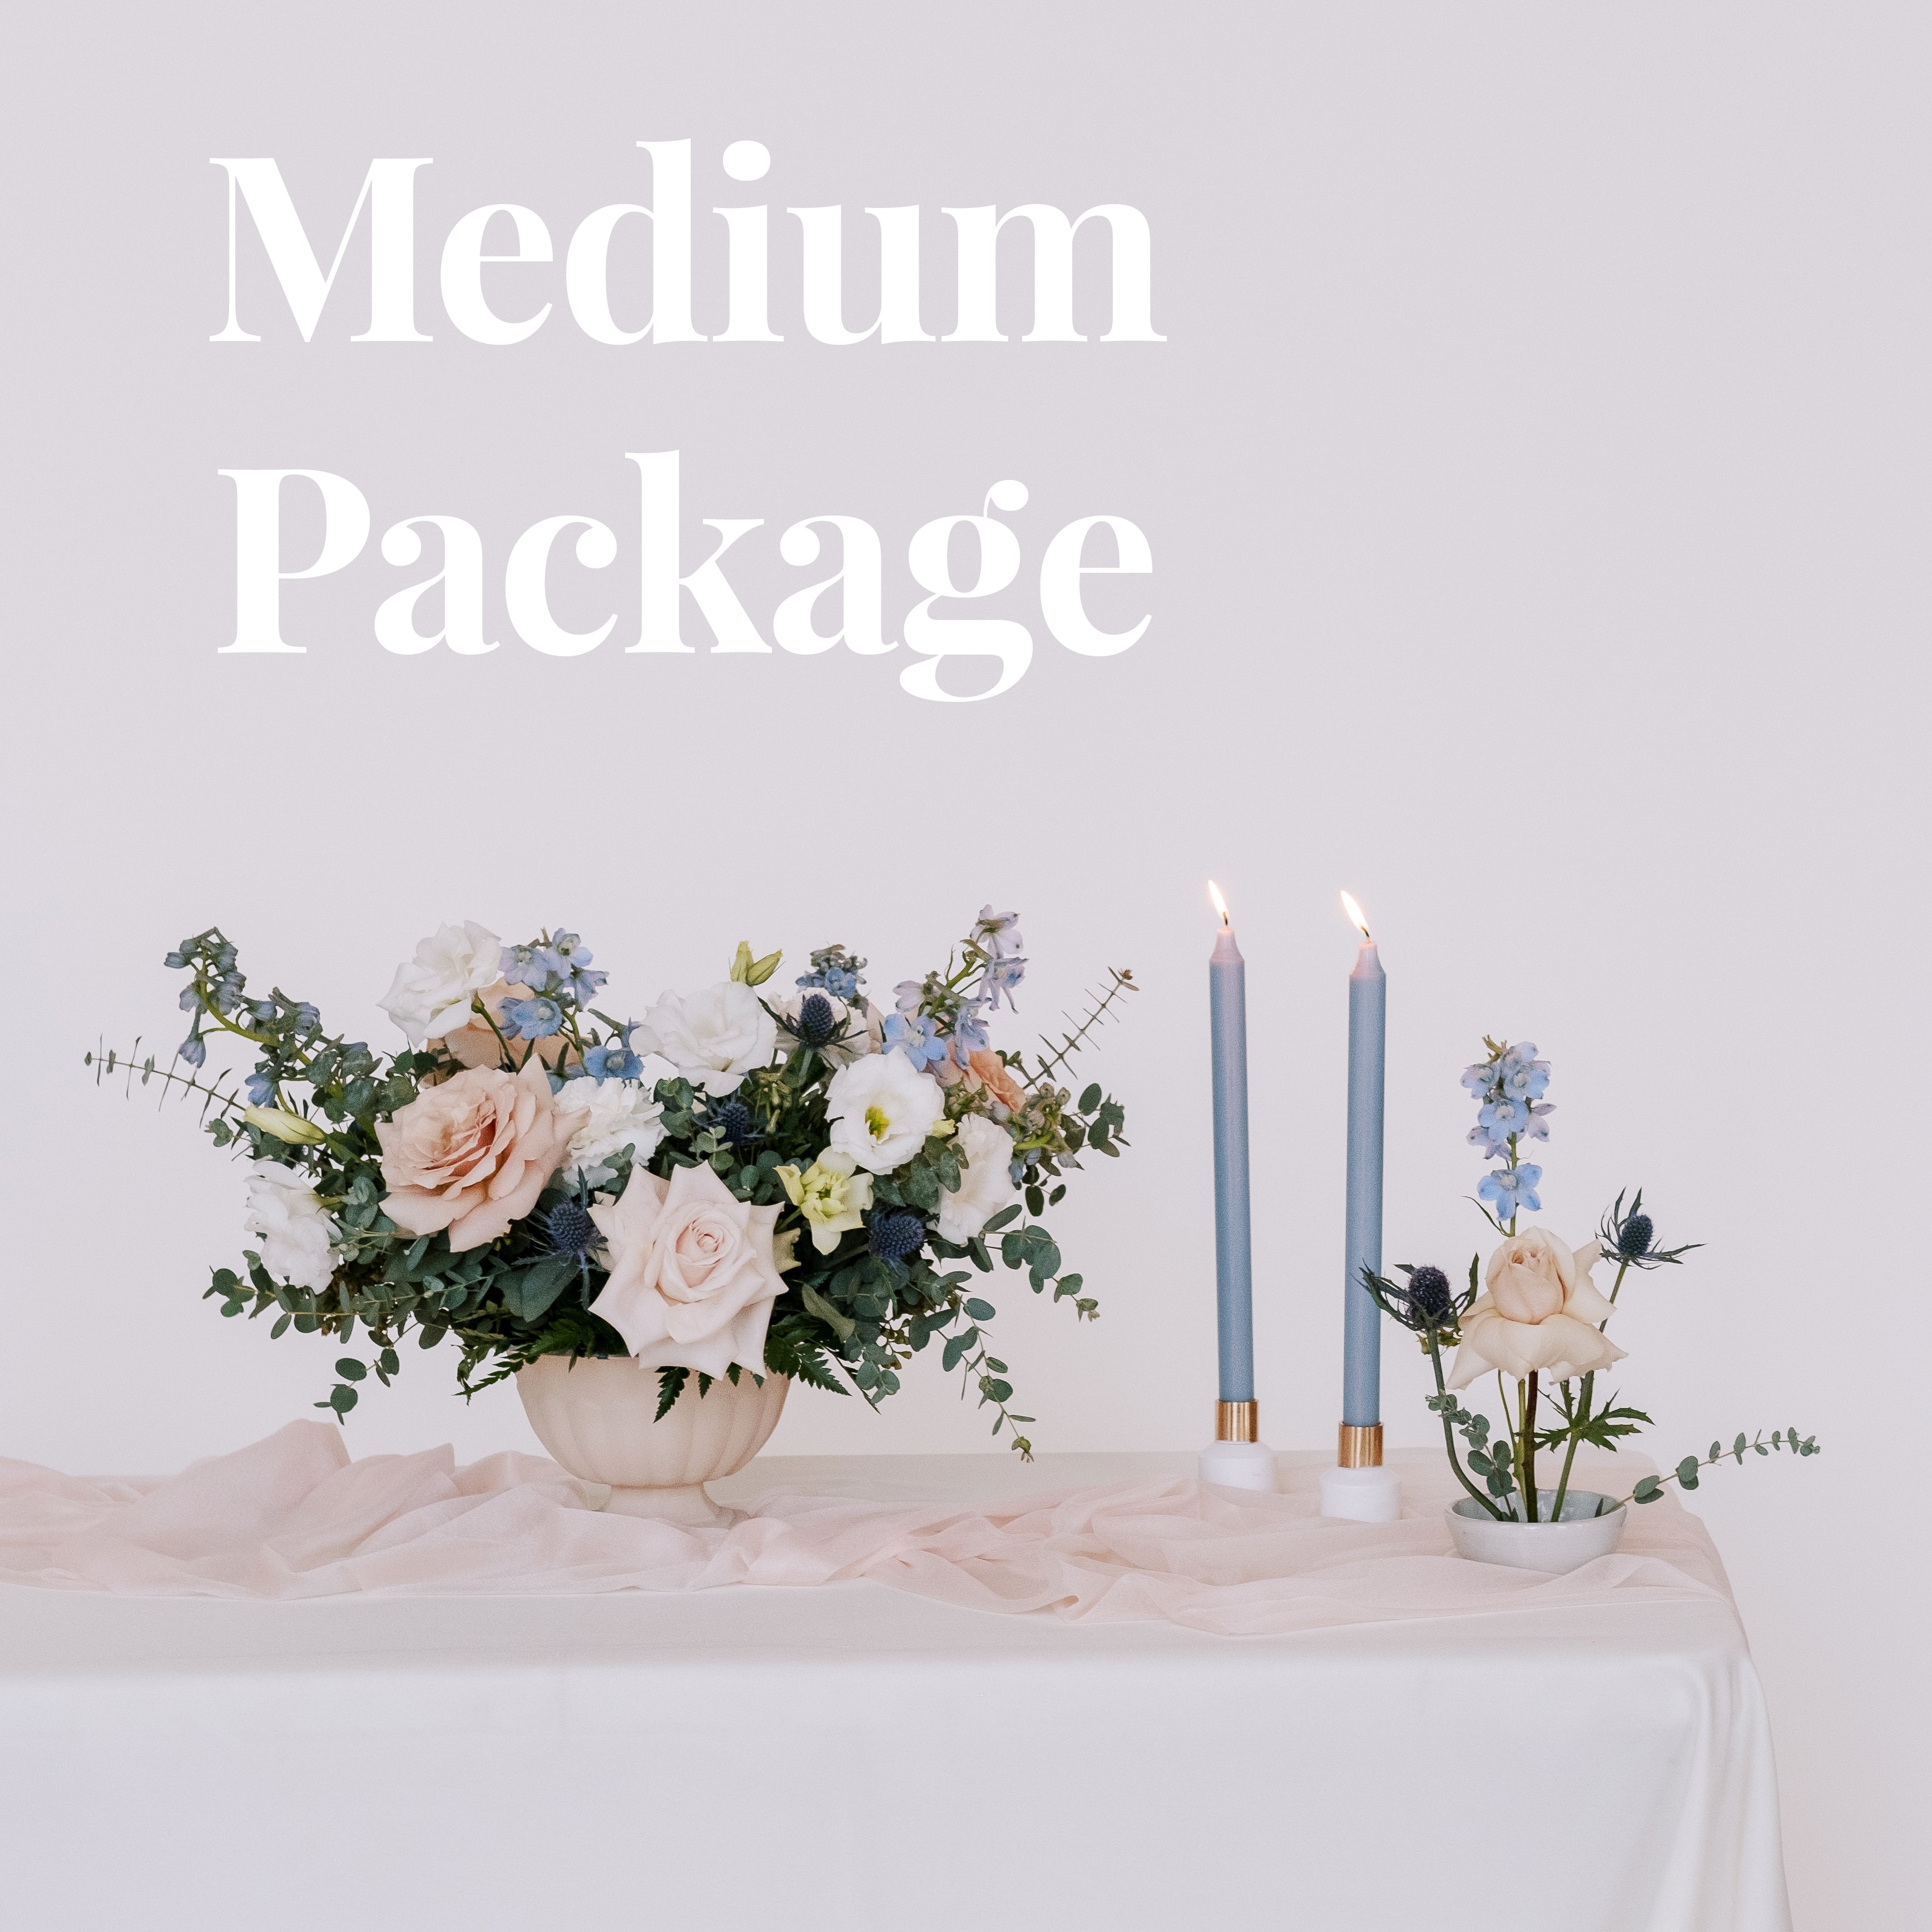 Dusty Blush and Blue Flowers | DIY Wedding Kits | Flower Moxie